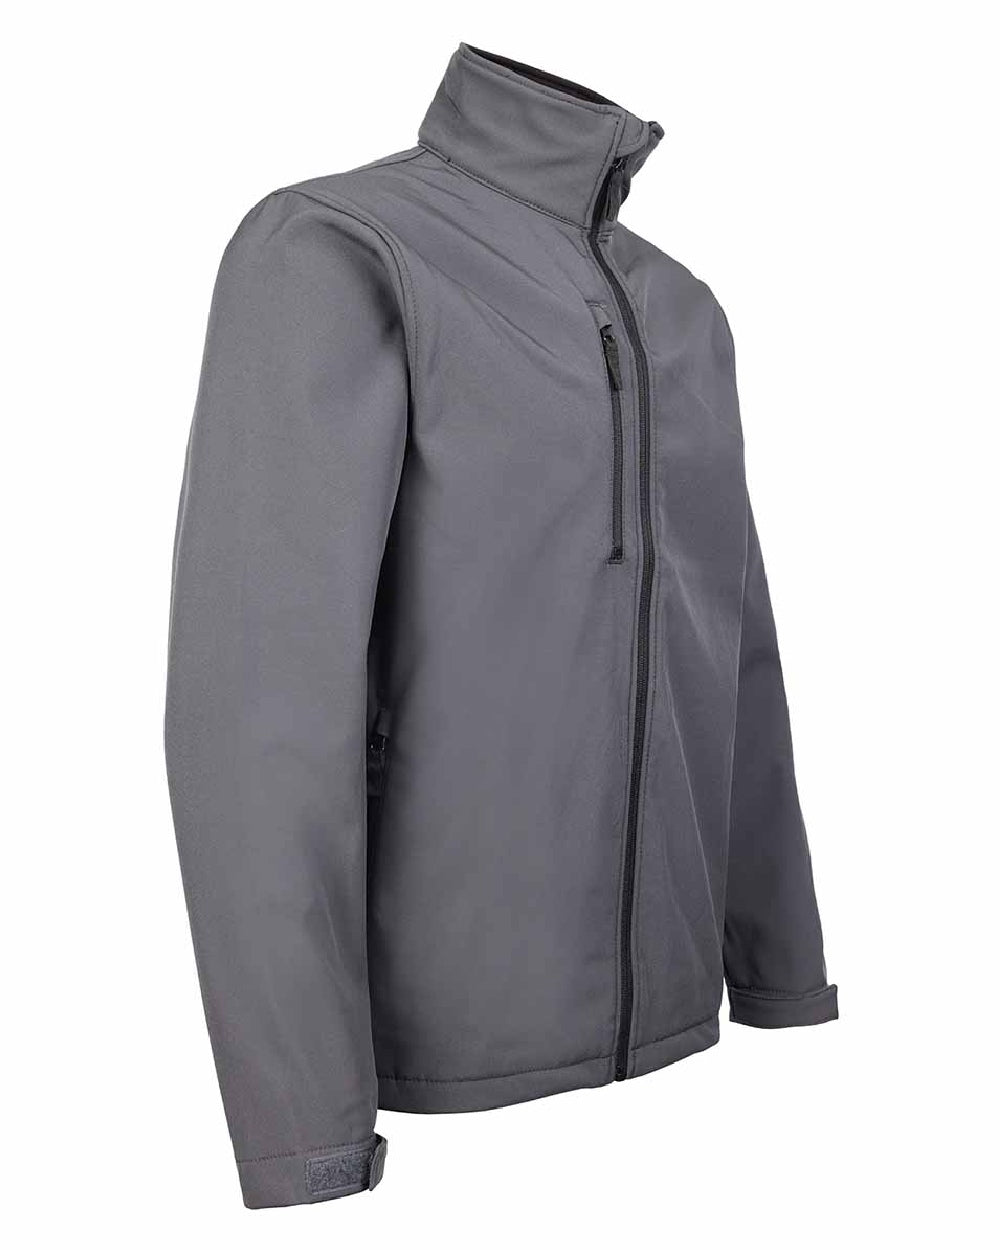 Grey coloured Fort Selkirk Softshell Waterproof Jacket on white background 